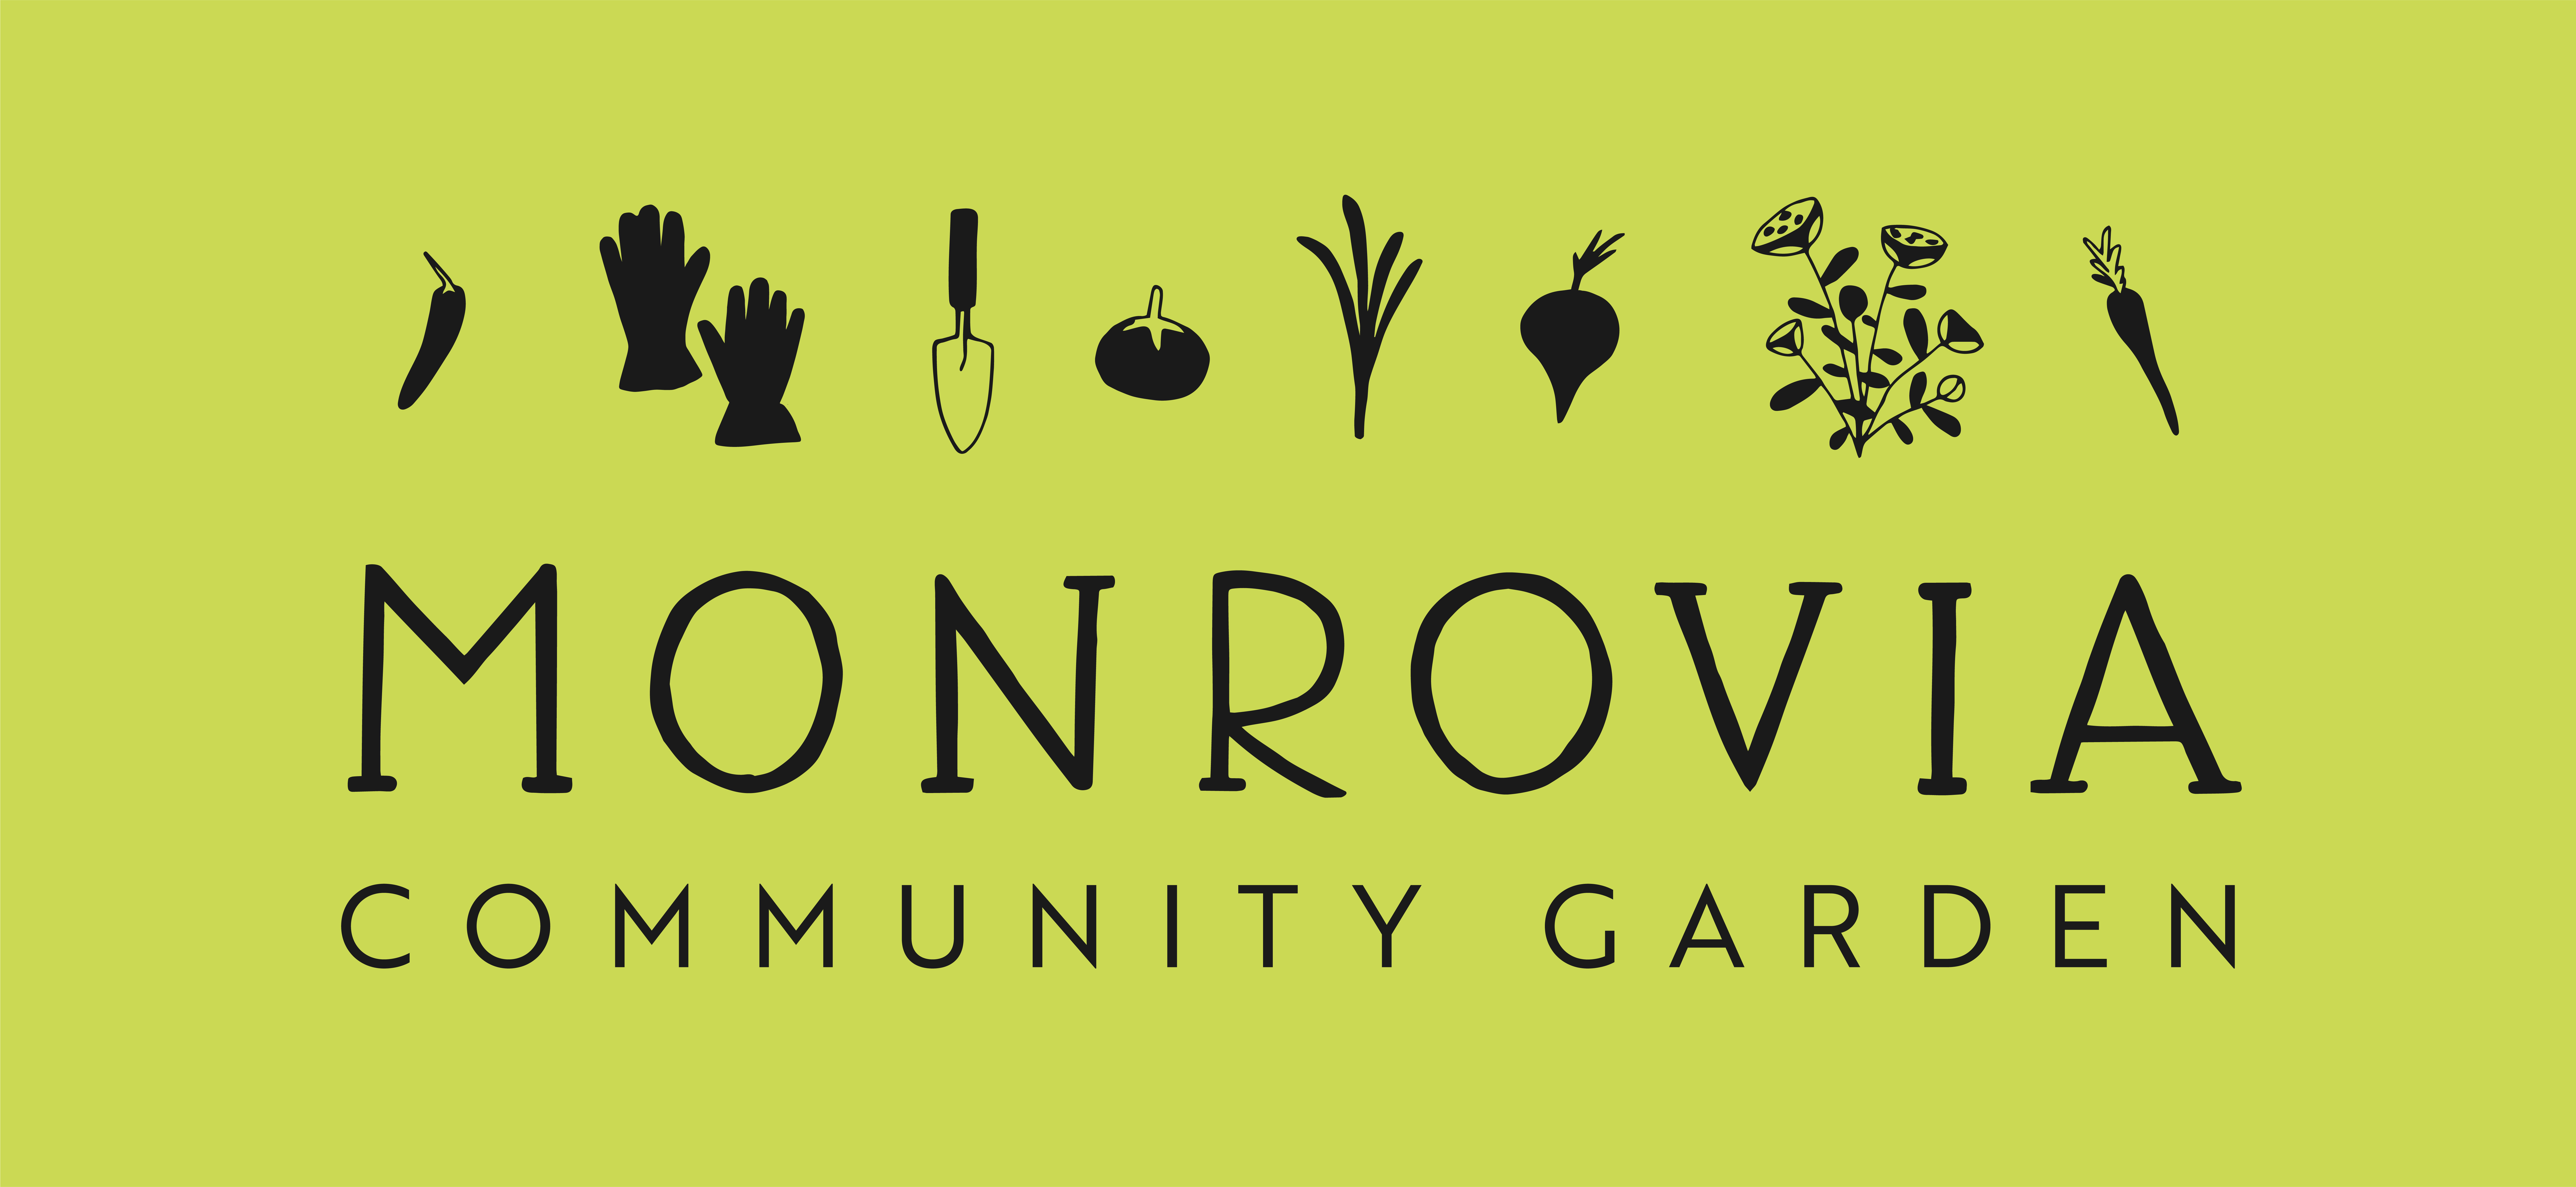 Monrovia Community Garden